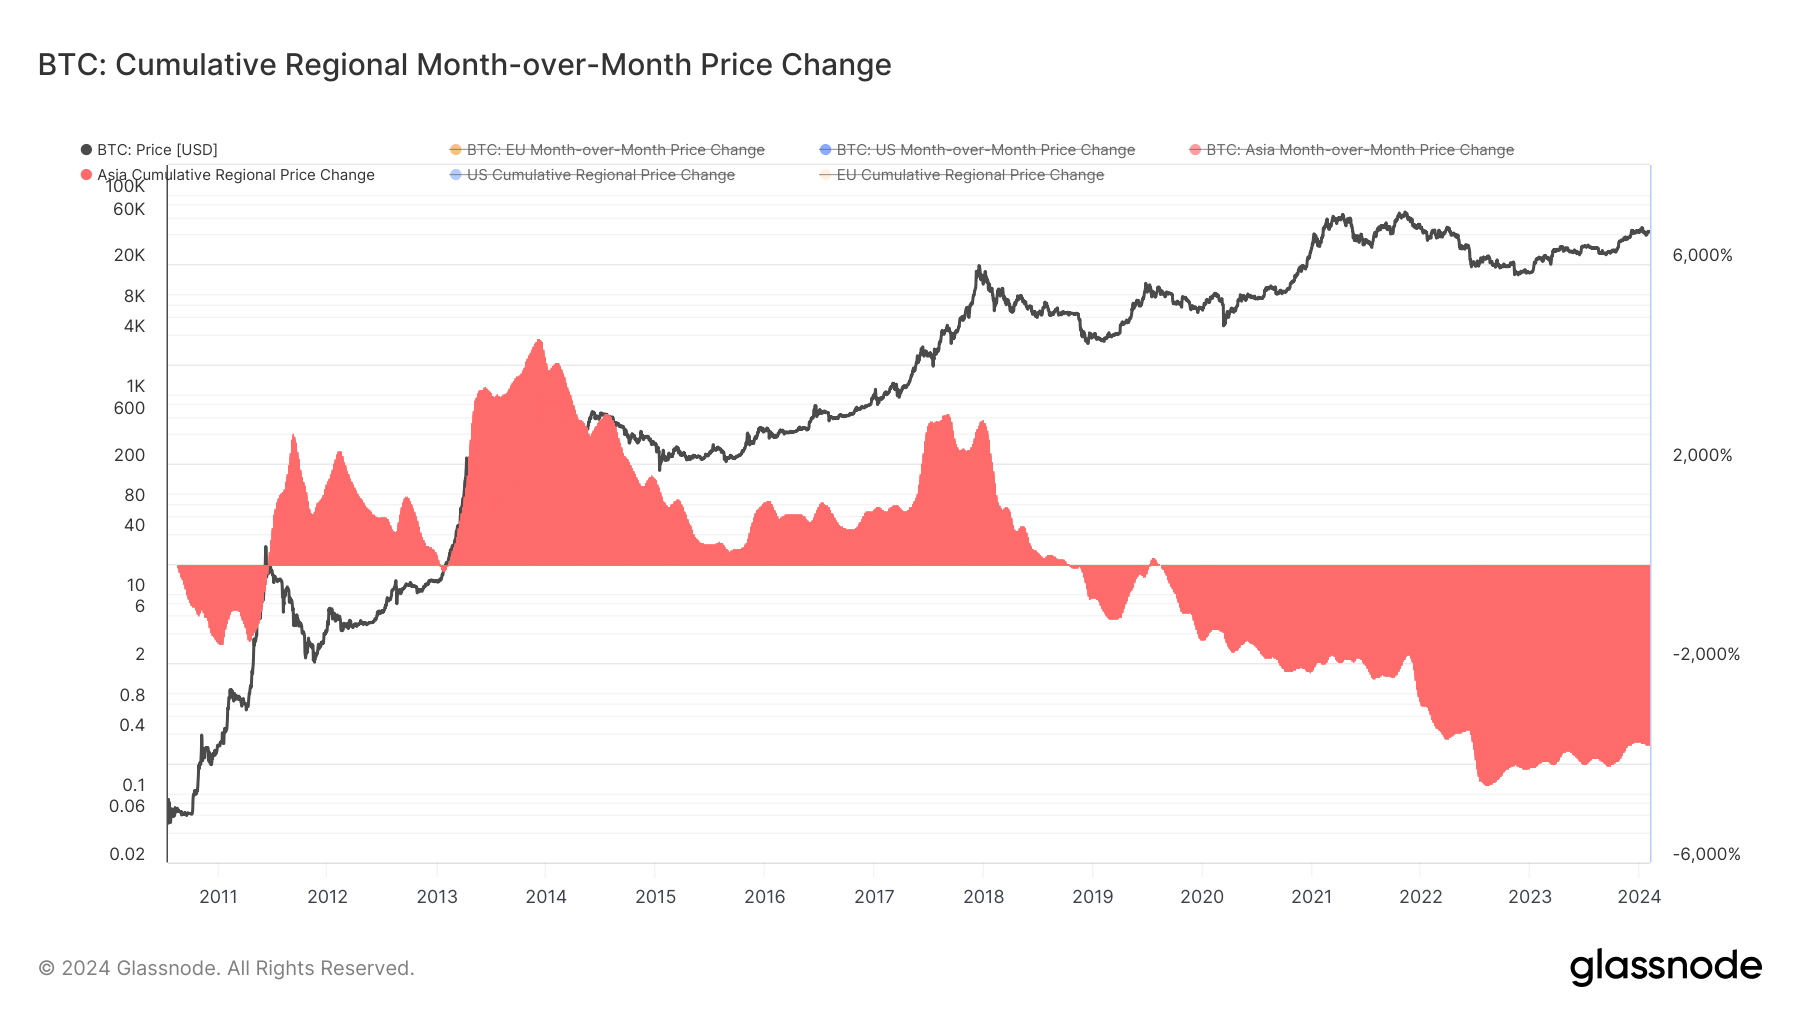 Asia Cumulative Regional Month-over-Month Price Change: (Source: Glassnode)